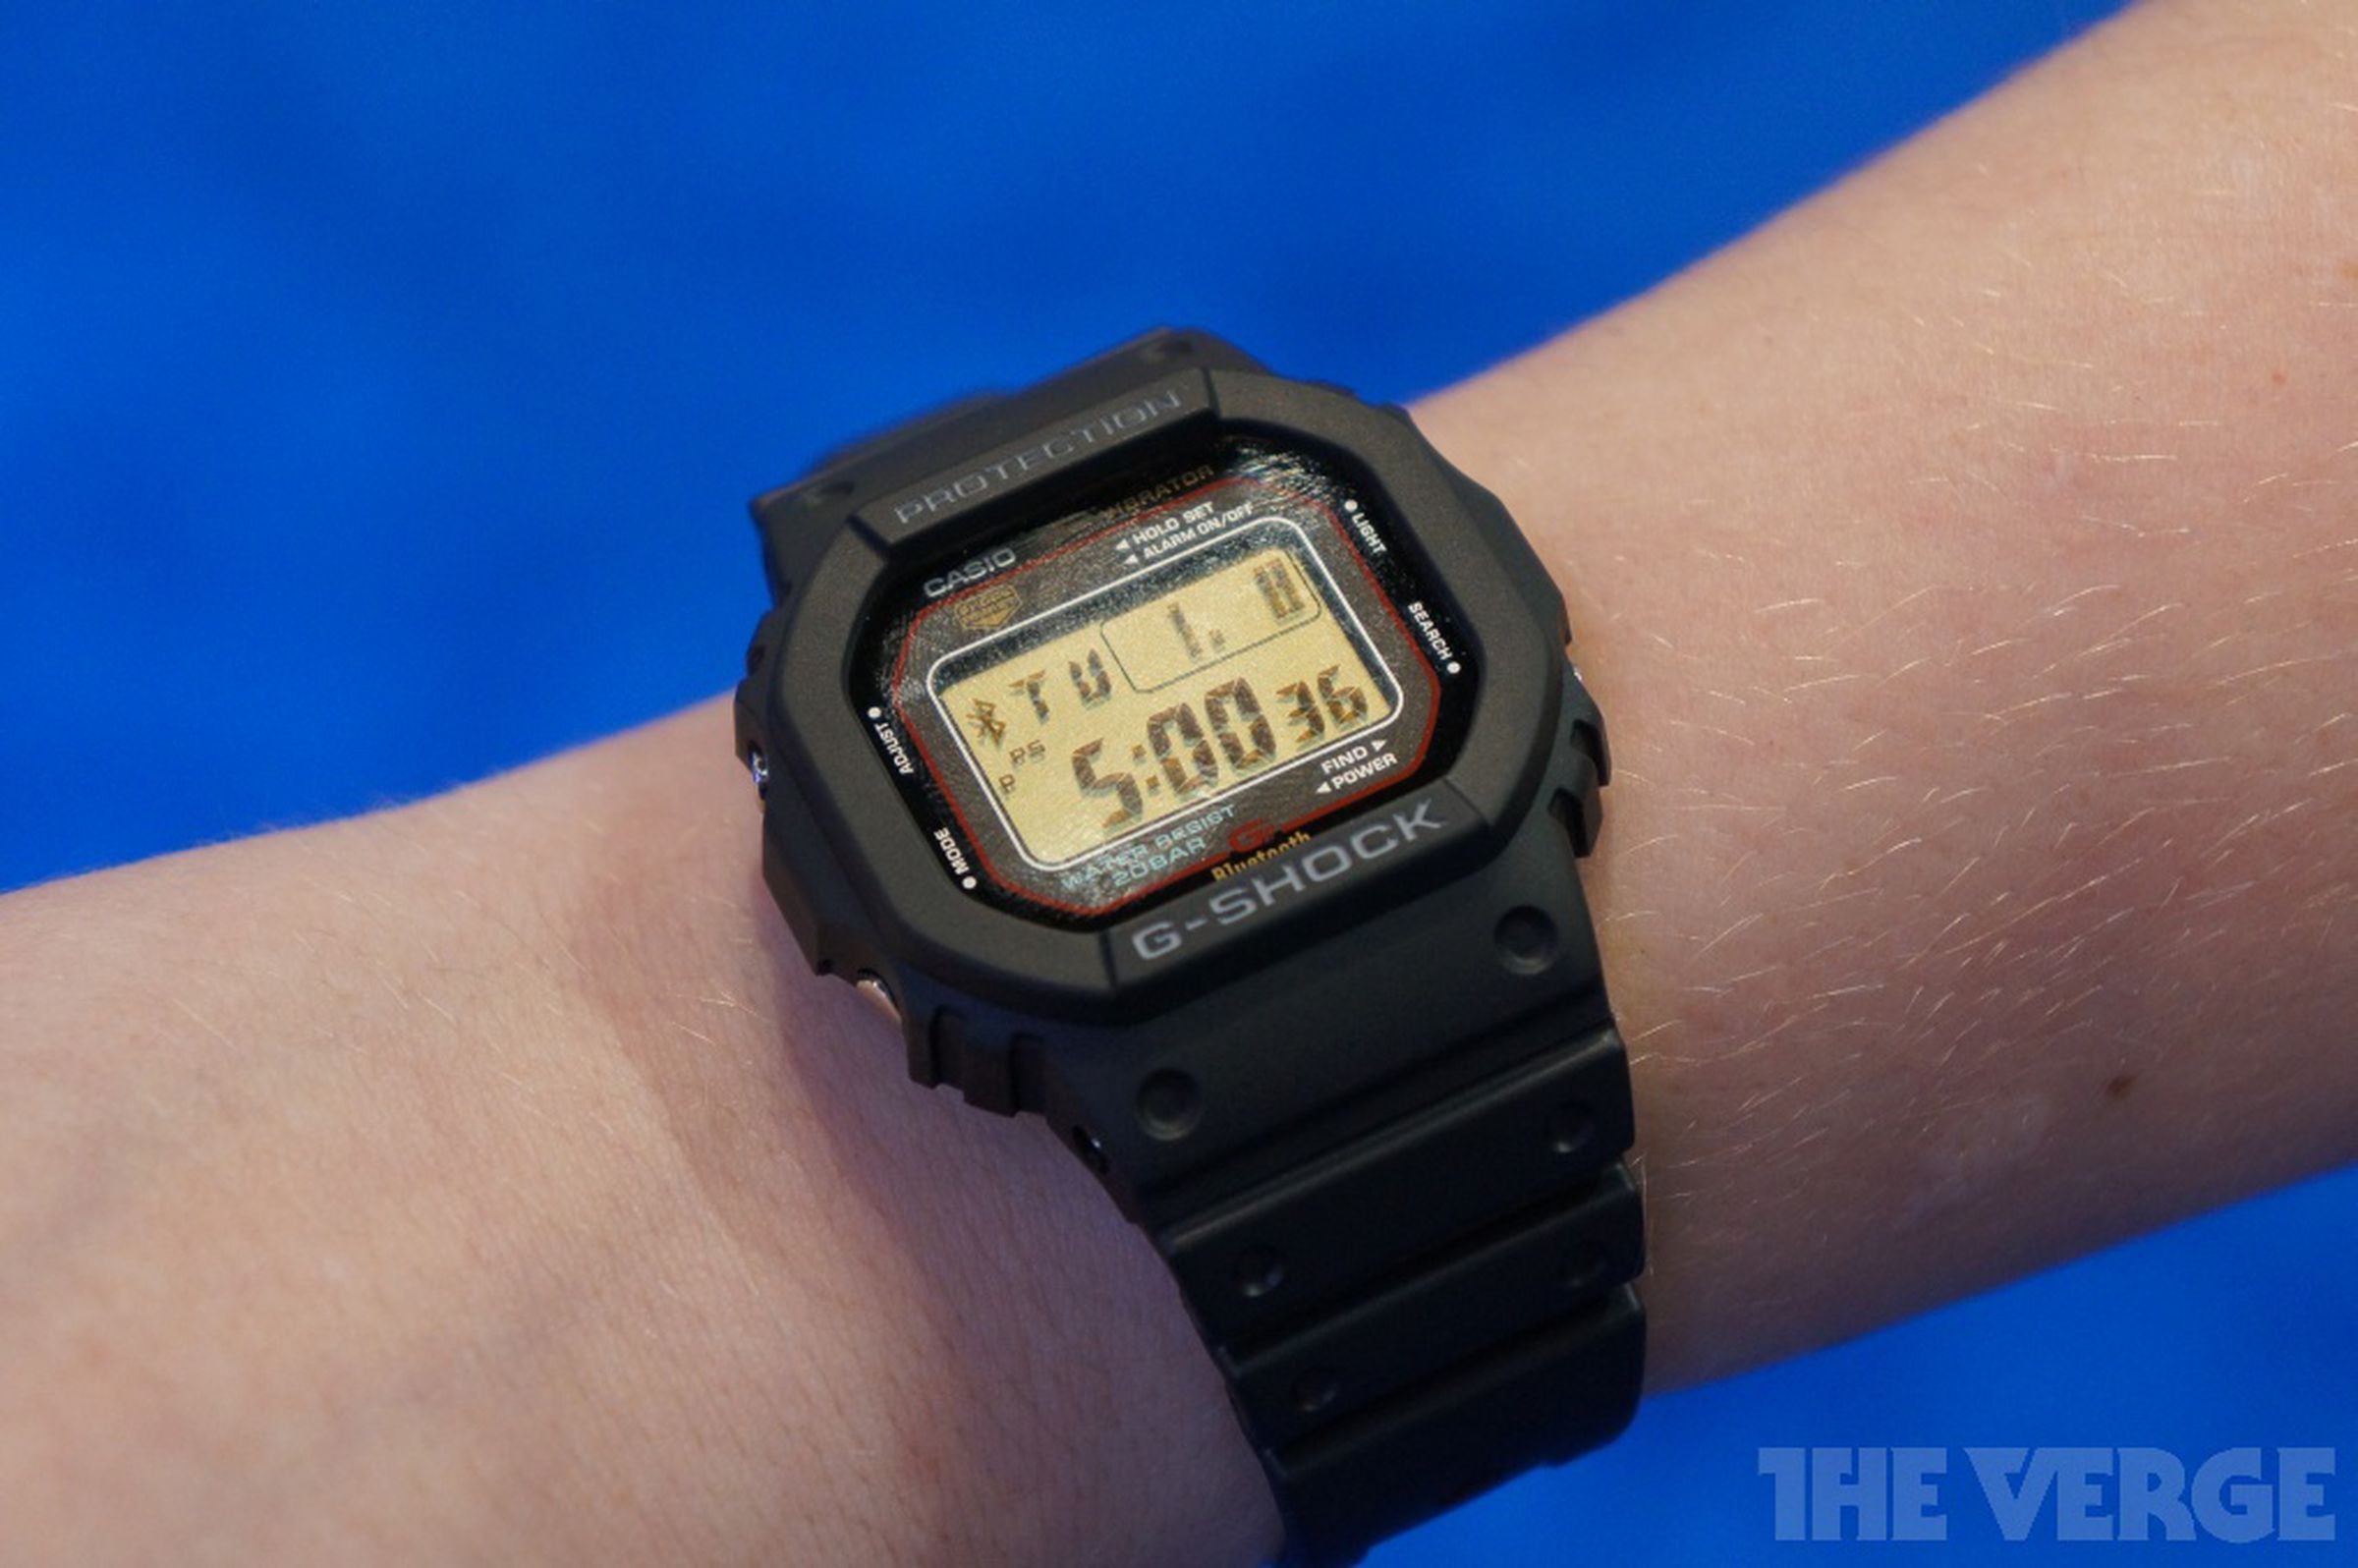 Casio GB-5600A Bluetooth smart watch hands-on photos